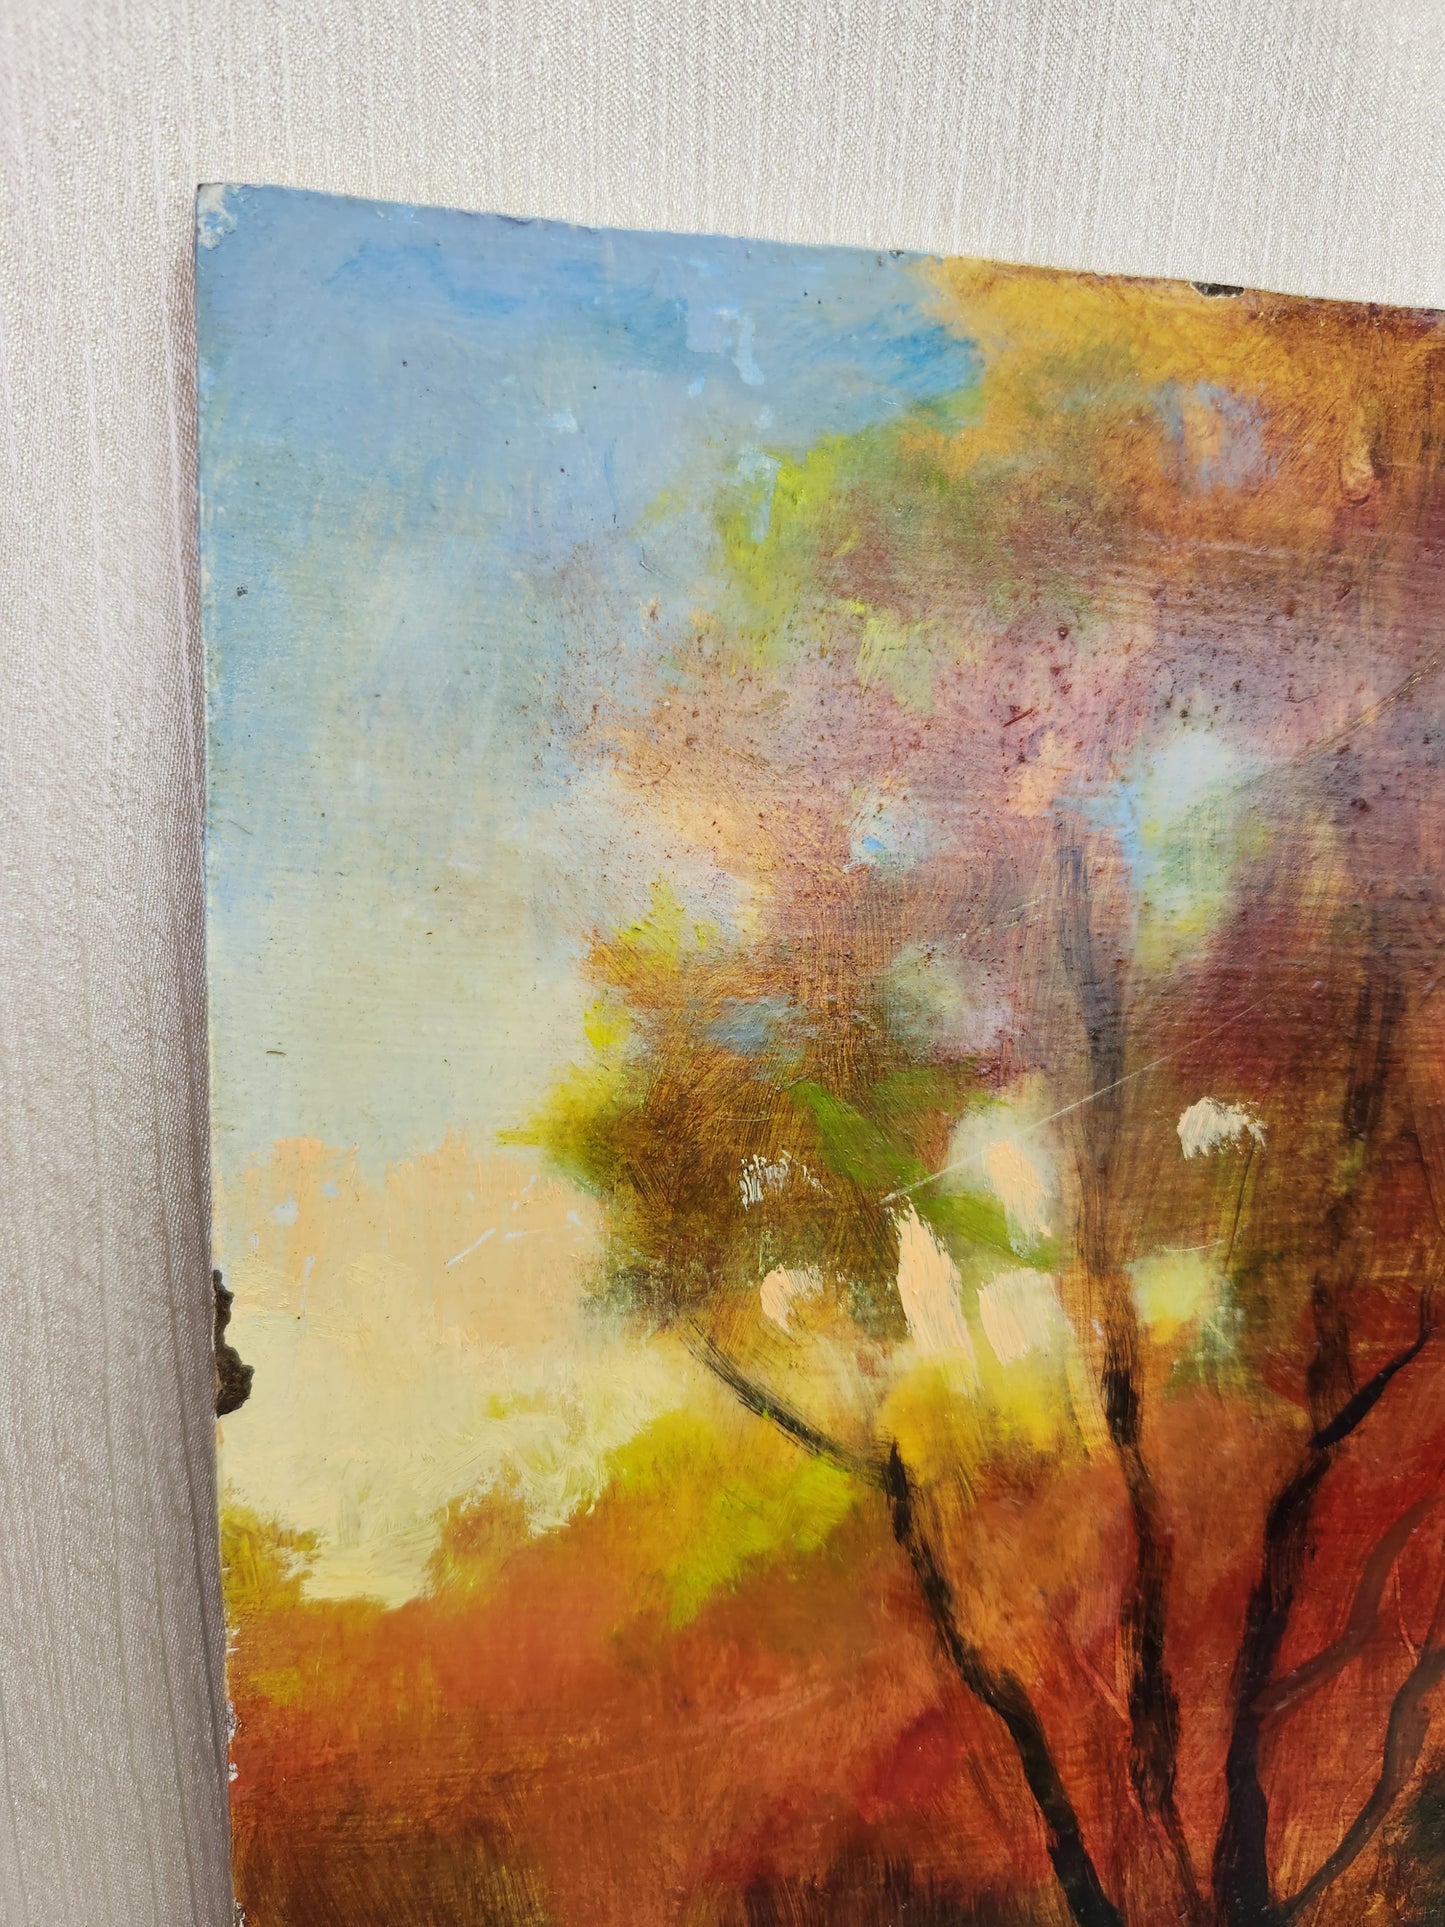 VTG - Karen Schmitz oil painting on hardboard "October Reflections" (slight damage)